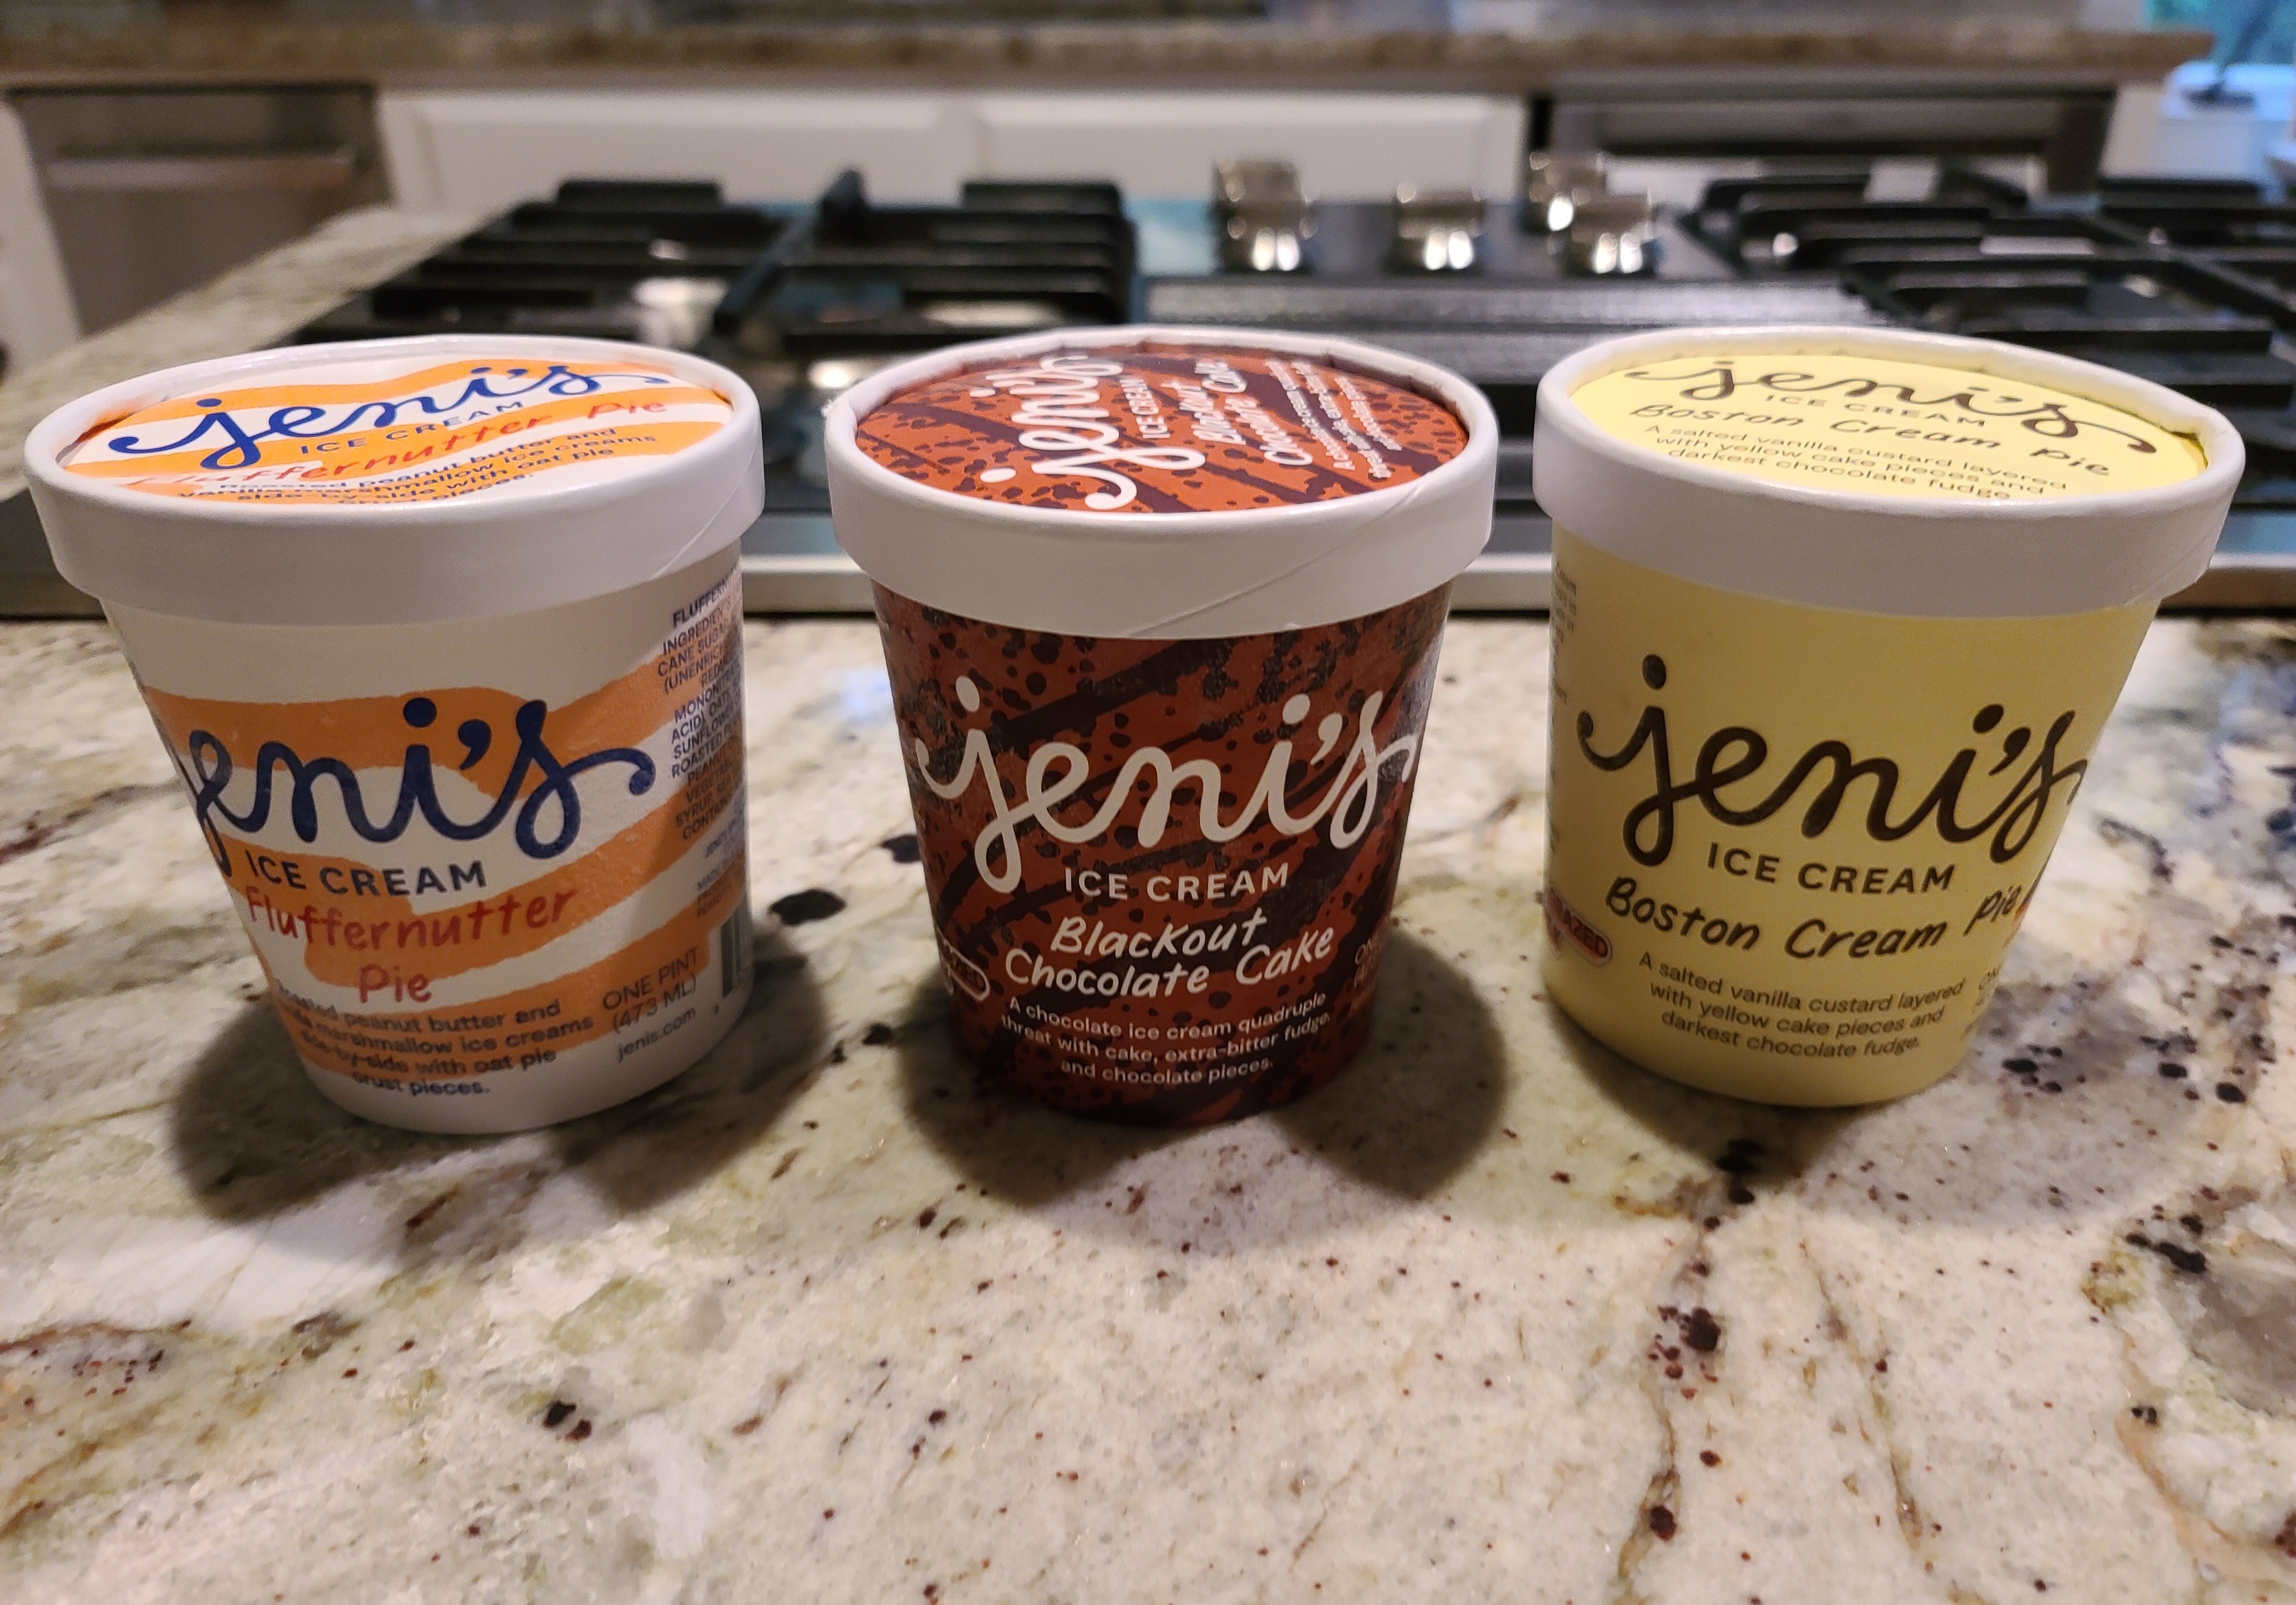 Favorite Flavor of Jeni's Ice Cream?